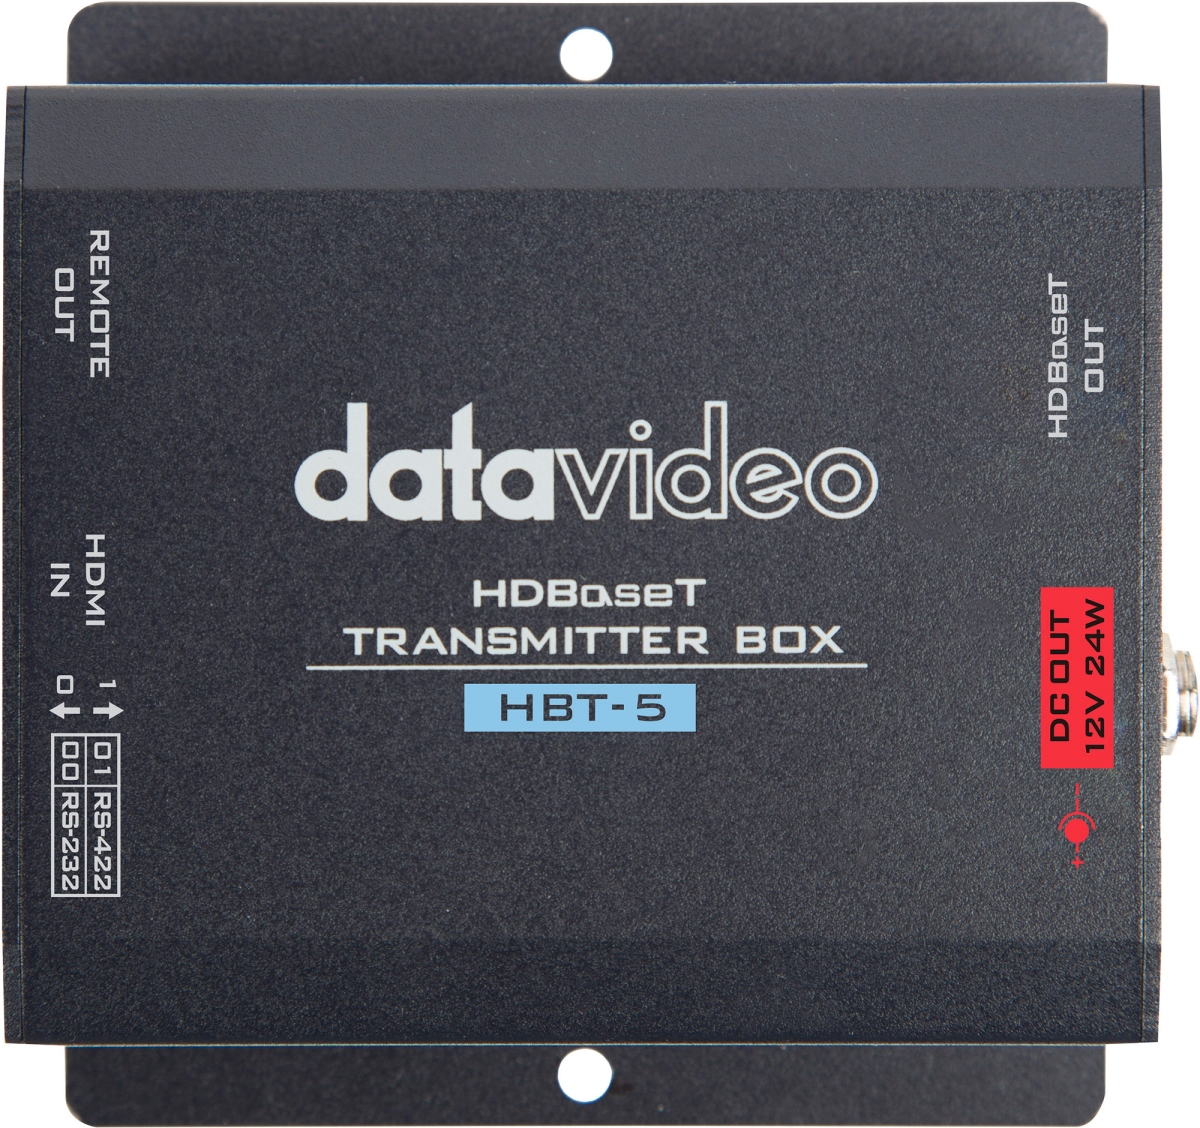 Picture of Datavideo DV-HBT-5 Short Range HDBaseT Transmitter Transmit up to 30 m for 4K & 60 m for 1080p Signals